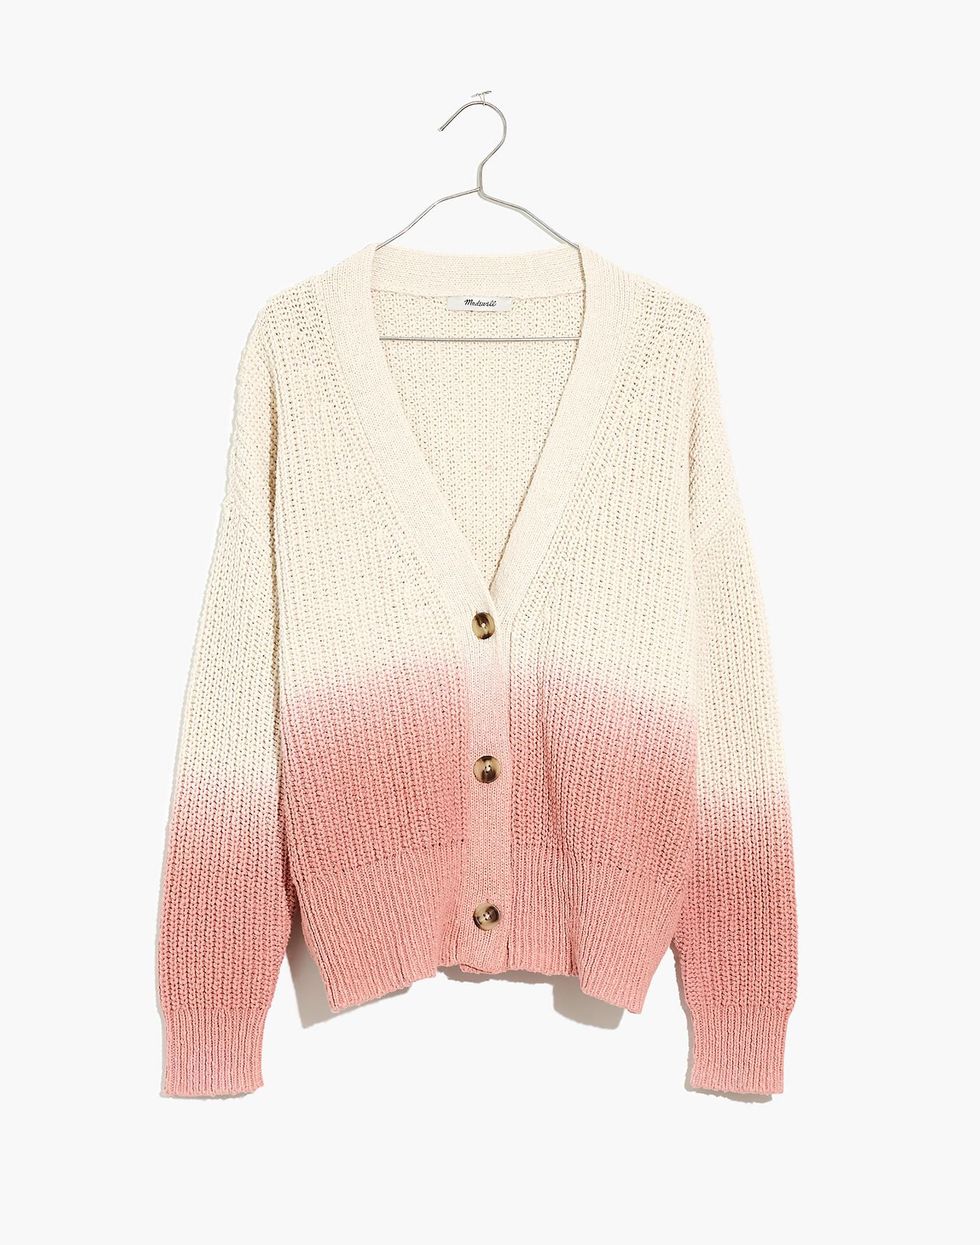 Madewell Dip-Dye Courtland Cardigan Sweater